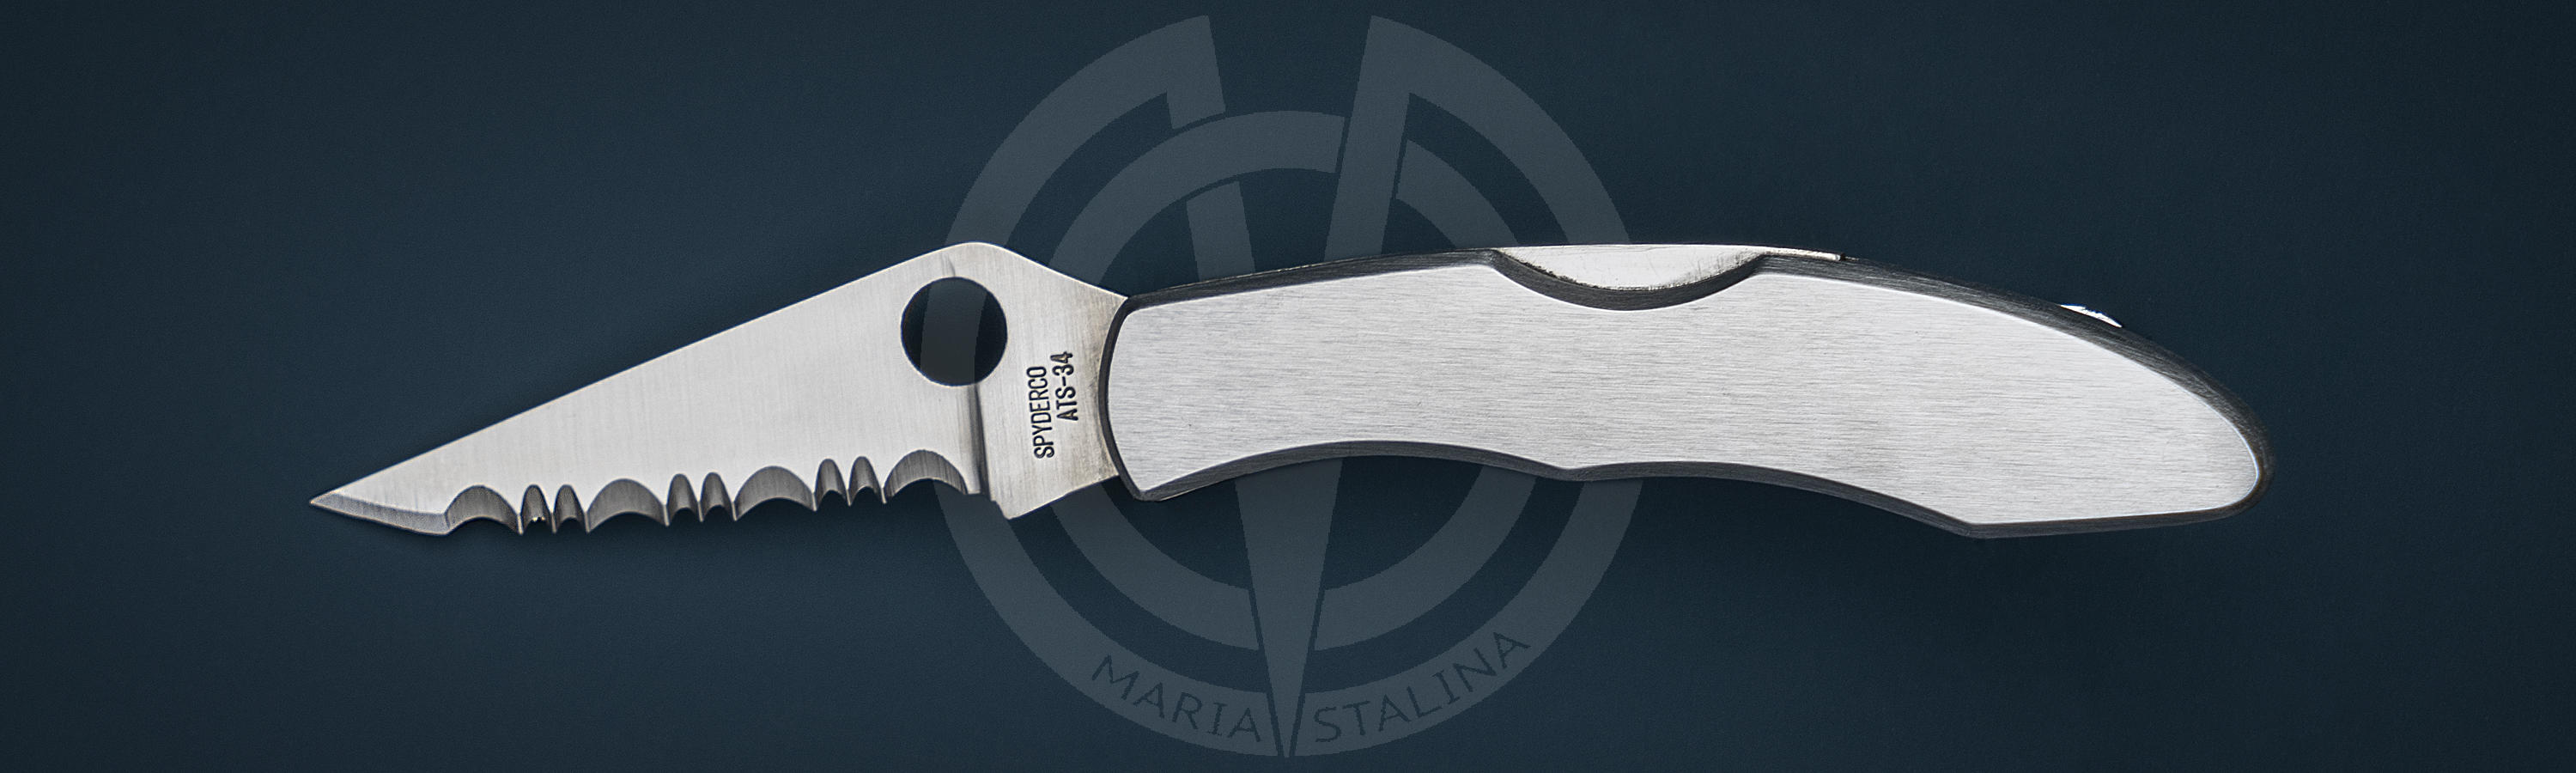 ATS-34 steel Spyderco Mini Police knife clothespin